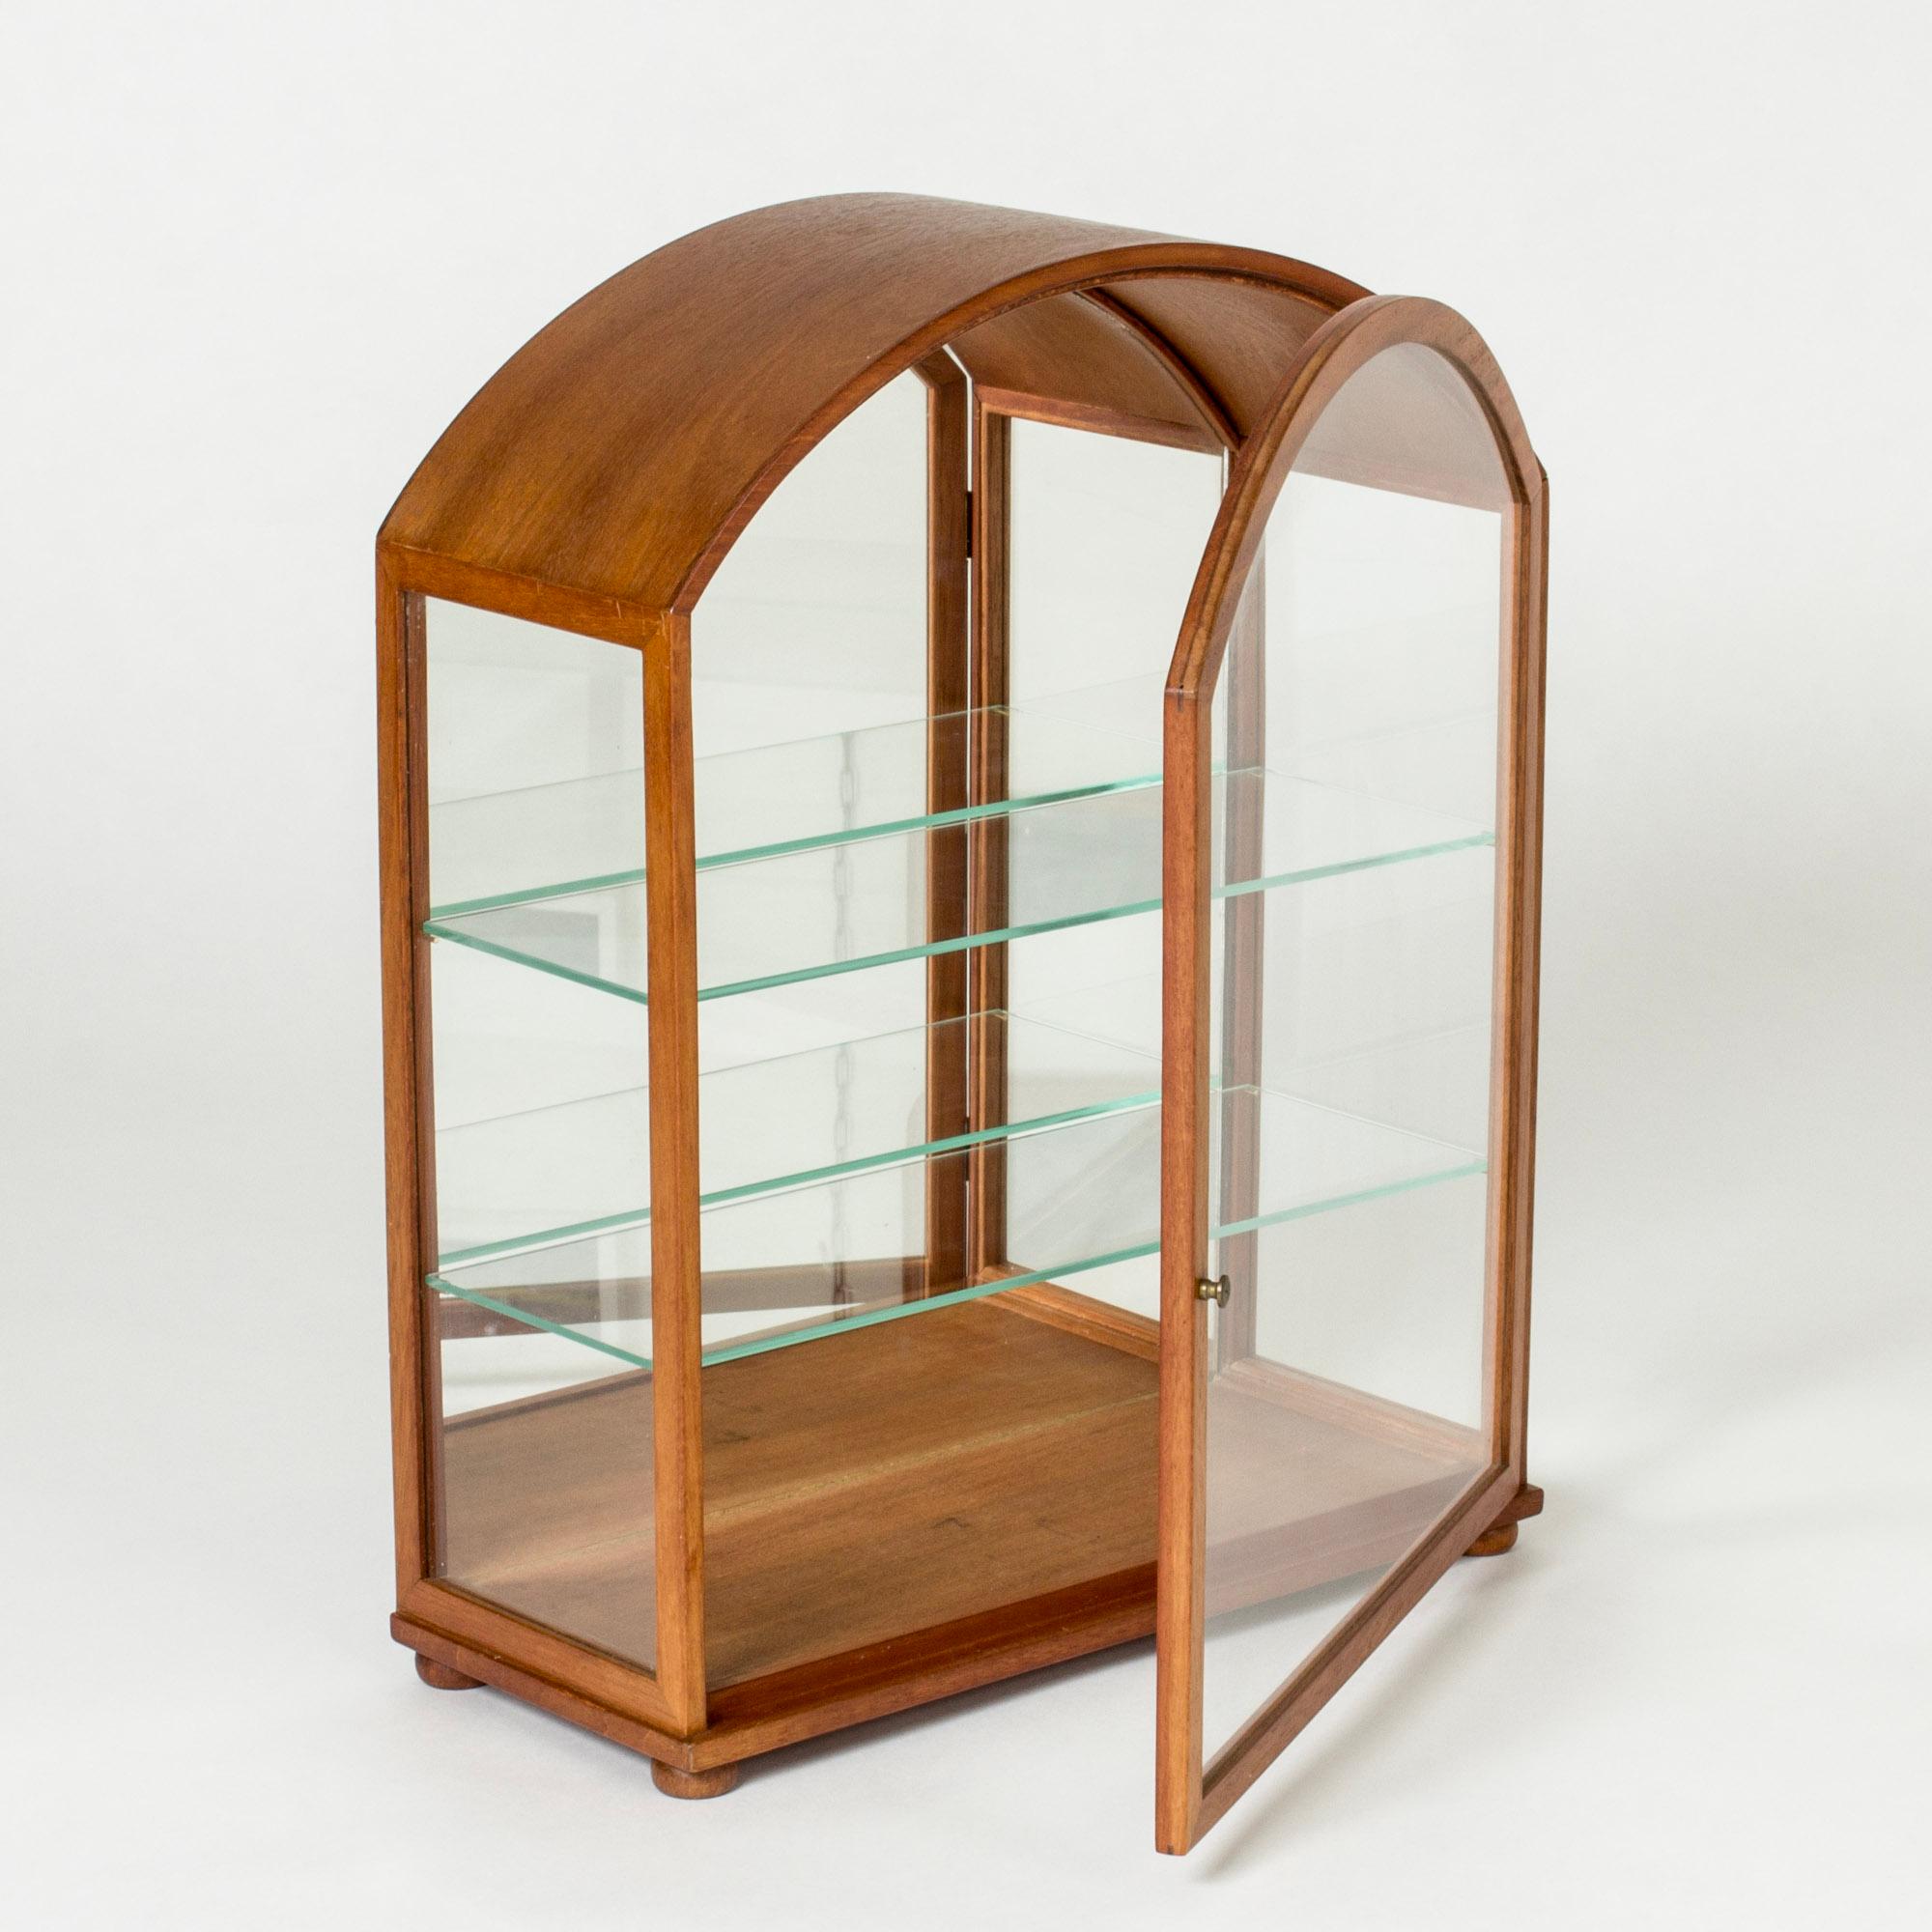 Scandinavian Modern Vintage Modernist Table Vitrine Cabinet by Josef Frank, Svenskt Tenn, 1950s For Sale